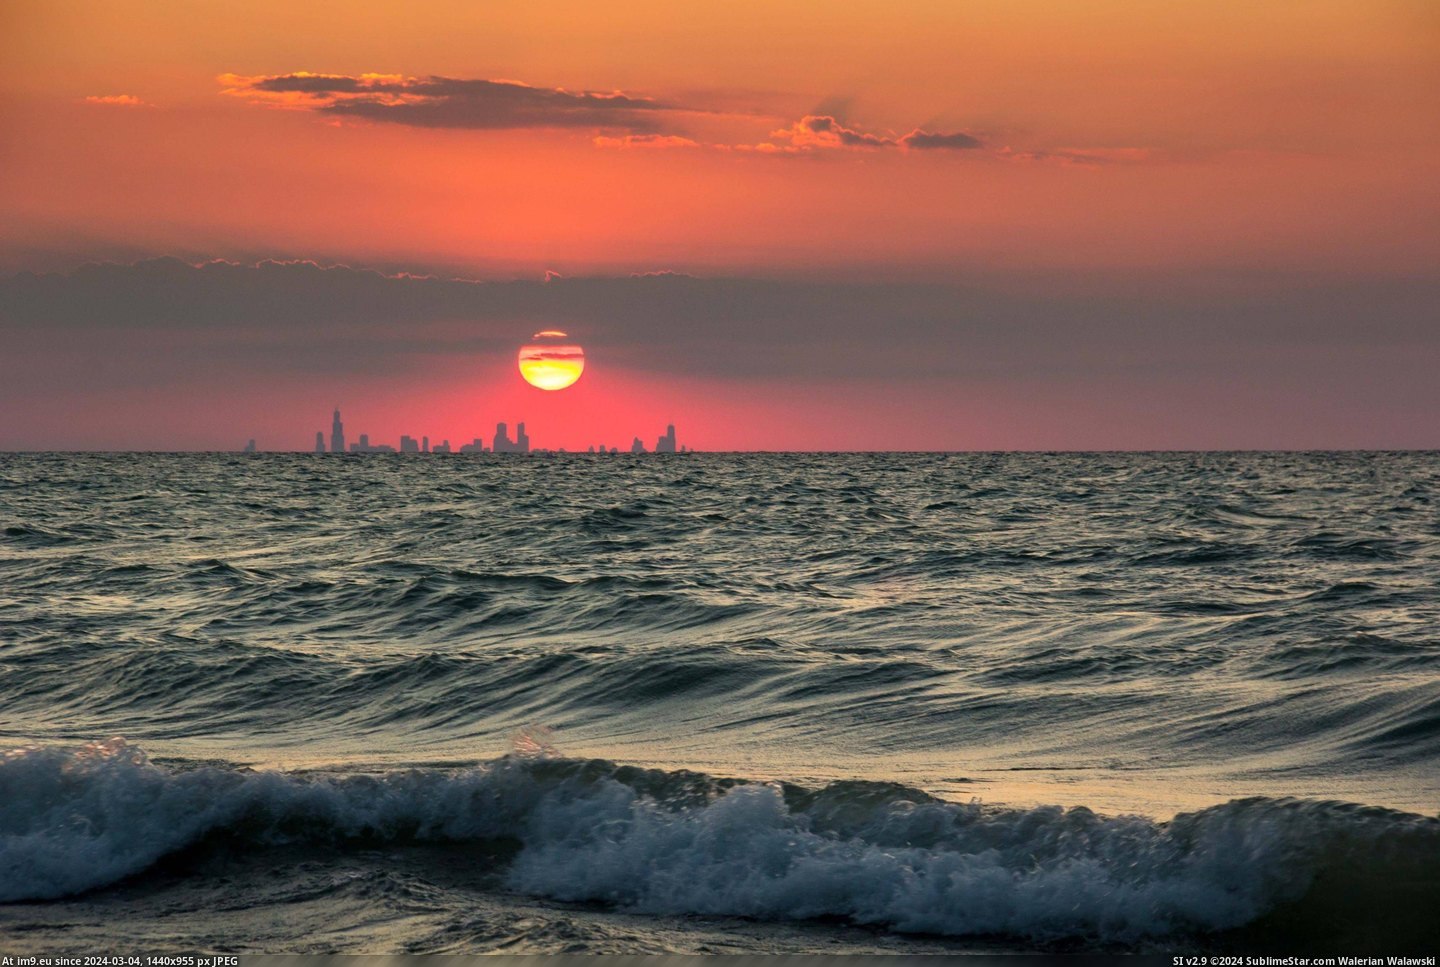 #Lake #Chicago #Skyline #Michigan [Pics] Chicago skyline from across Lake Michigan. Pic. (Изображение из альбом My r/PICS favs))